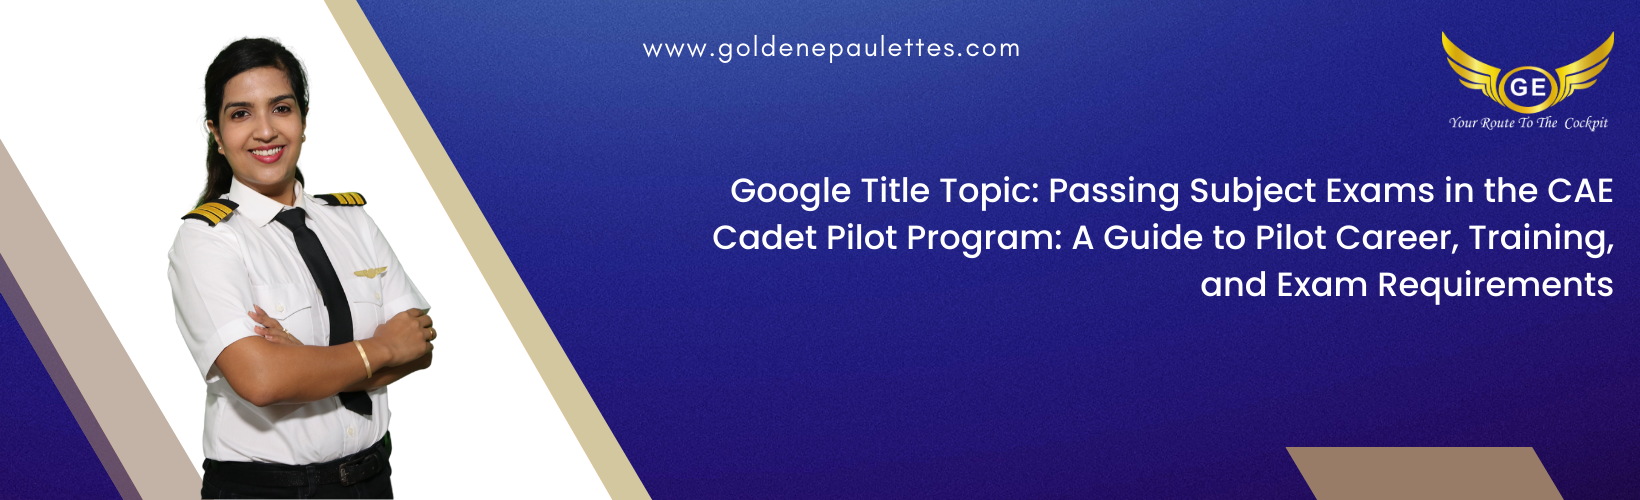 Subject Exams in the CAE Cadet Pilot Program